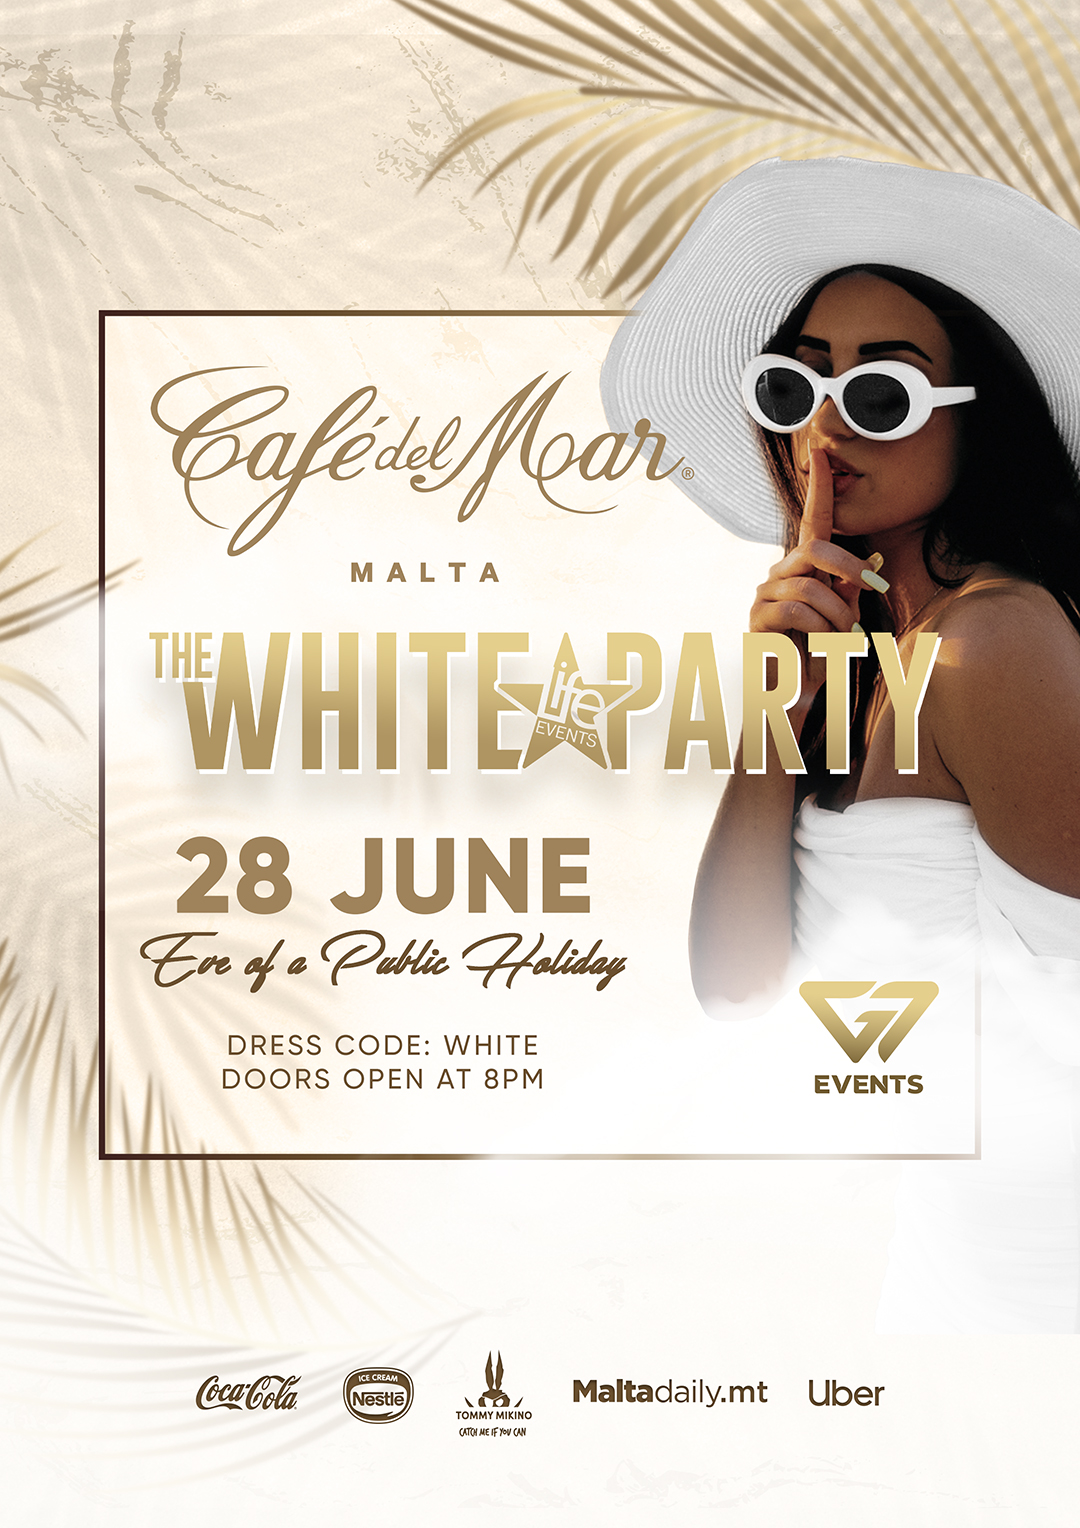 The Café del Mar White Party poster